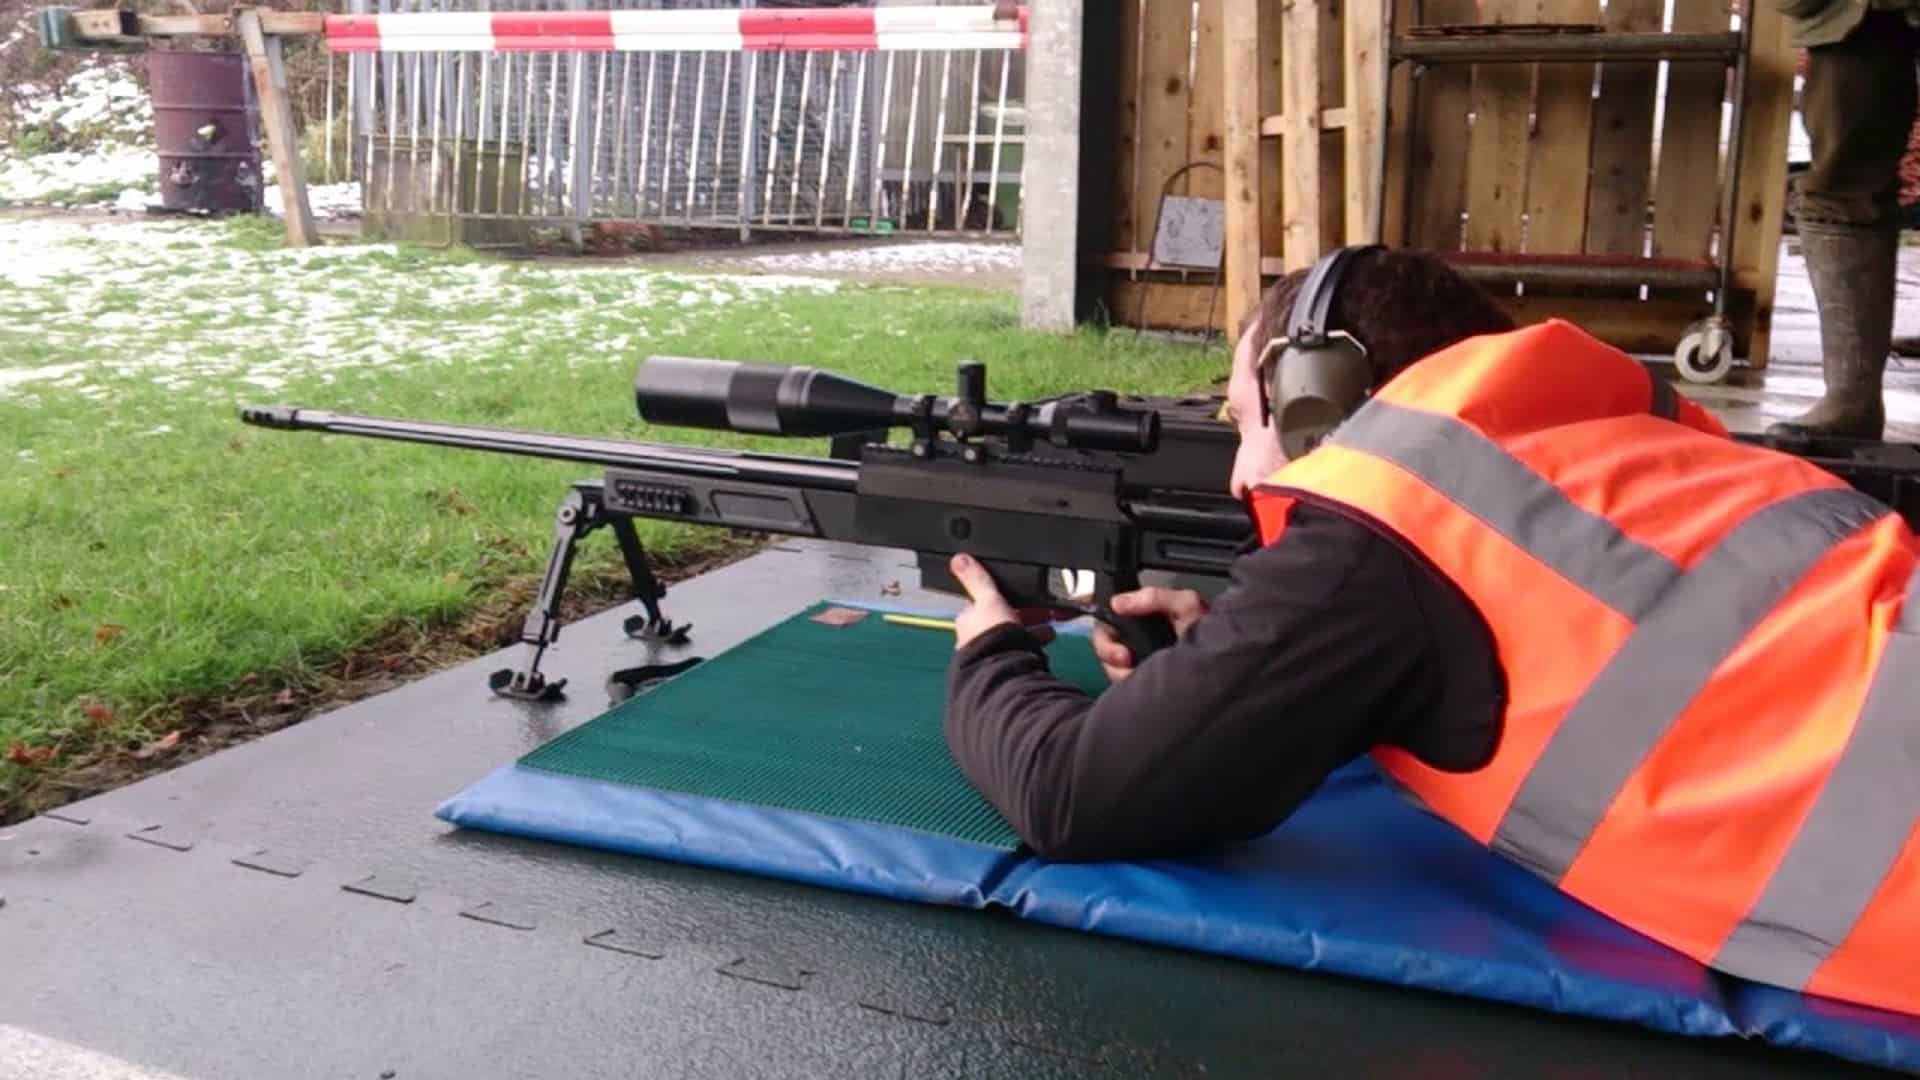 Reepham Shooting Centre in UK